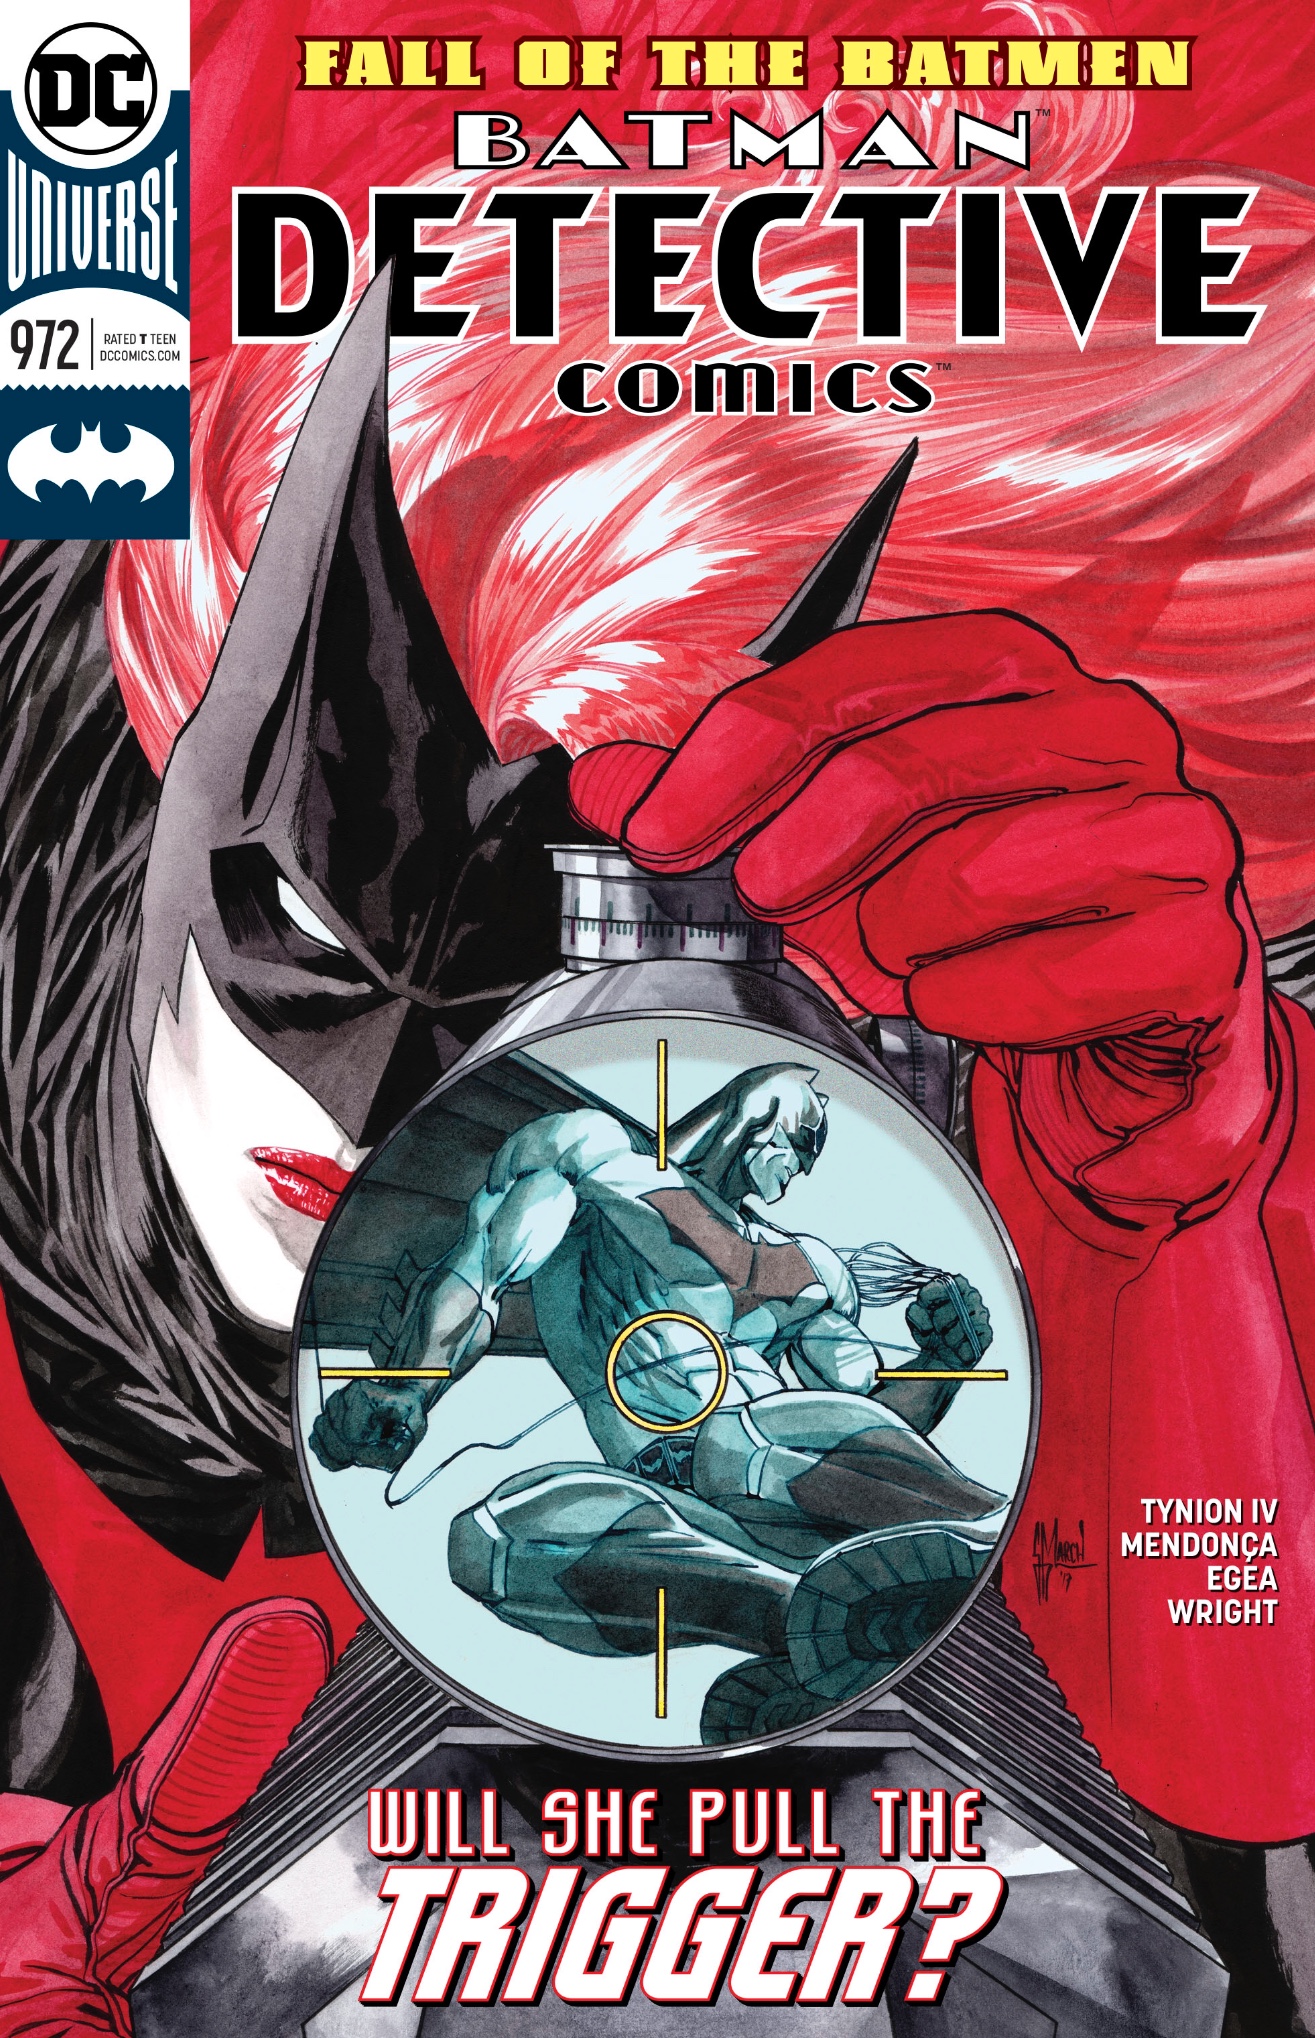 Detective Comics #972: Fall of the Batmen part four